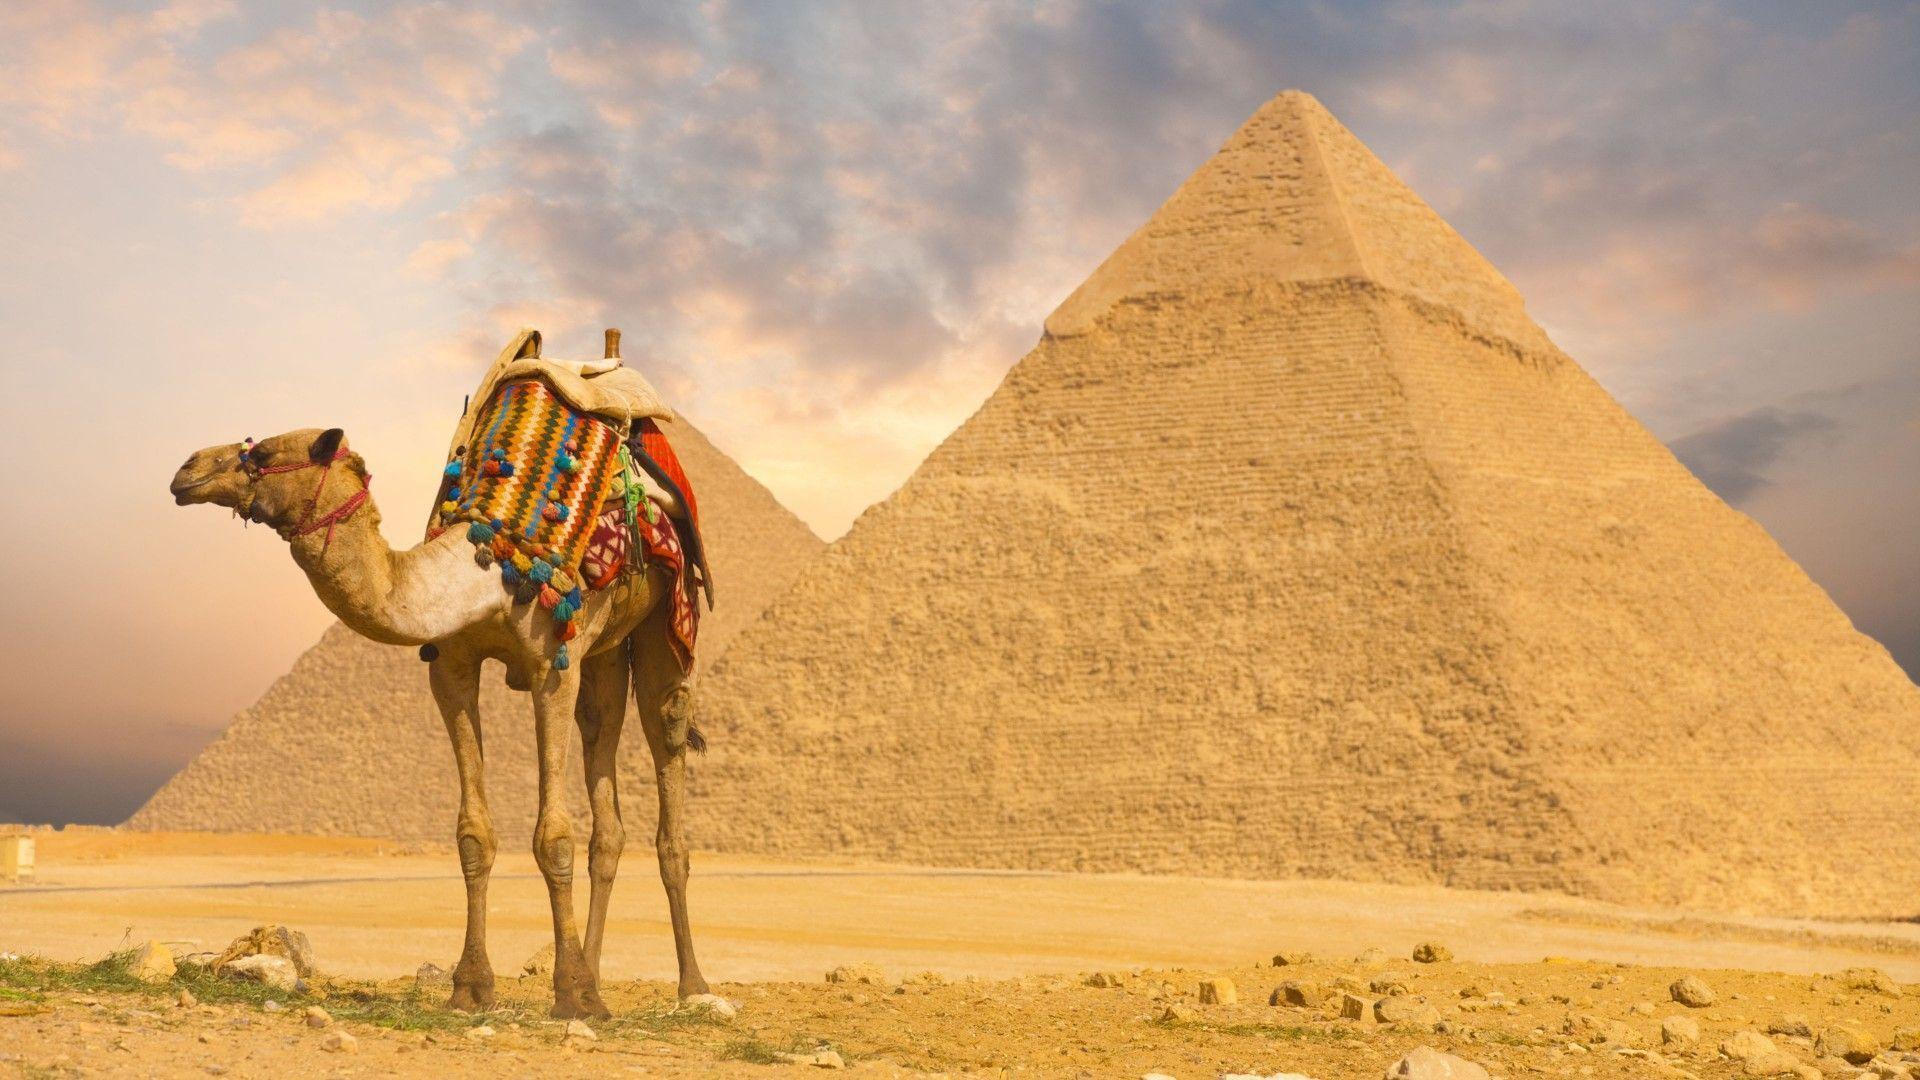 Camel And Pyramids Wallpaper 1920x1080